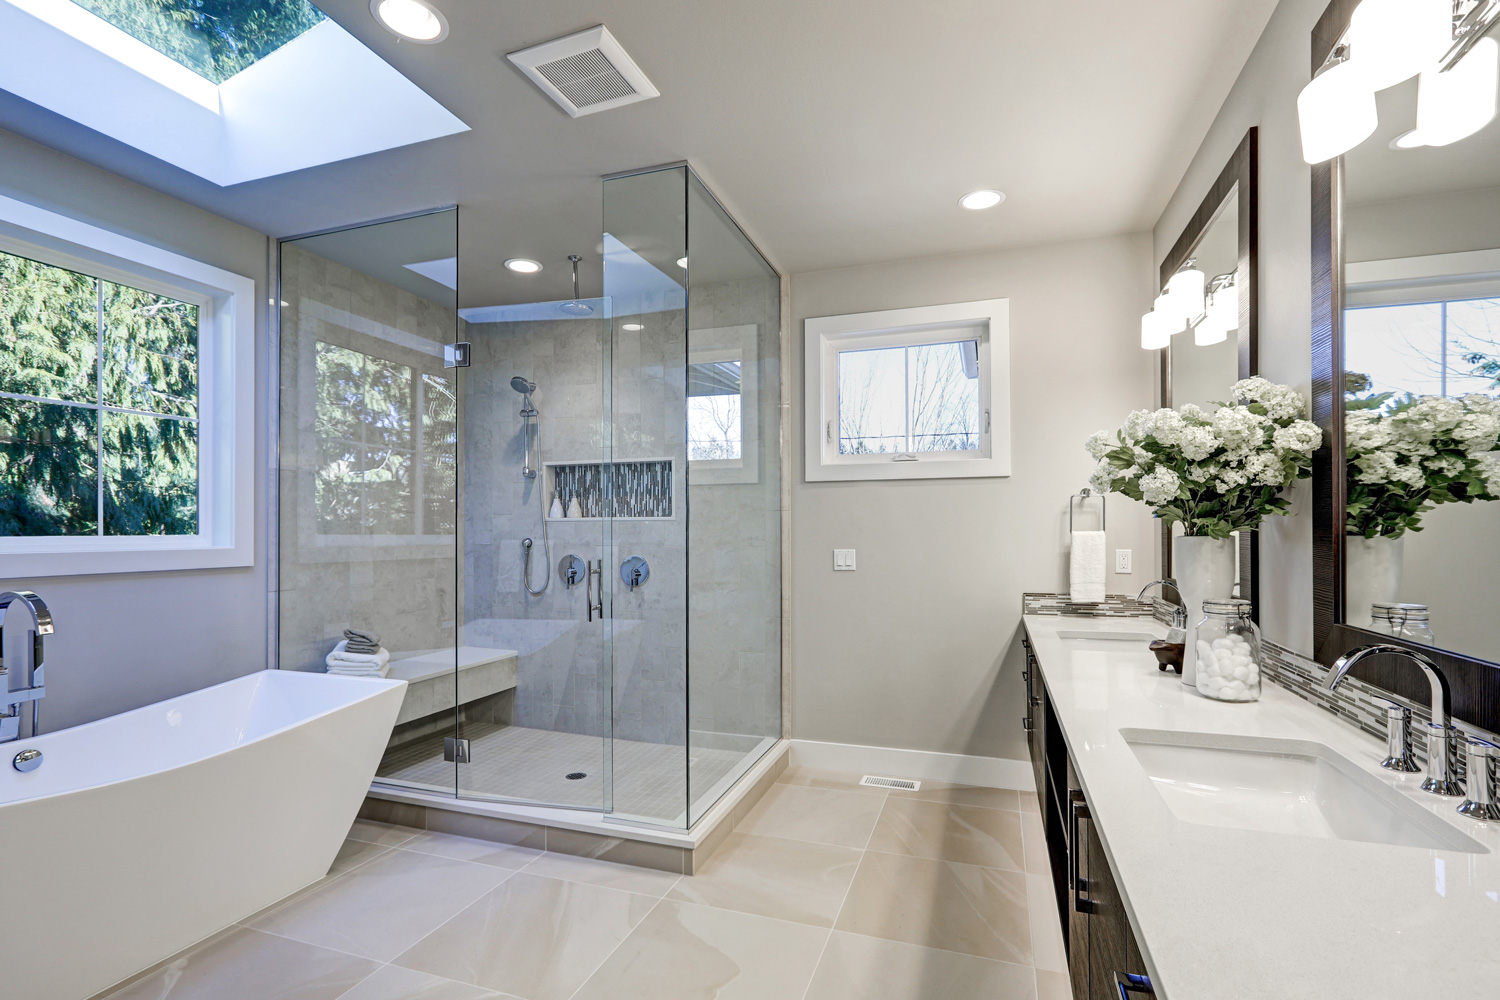 Spacious bathroom in gray tones with heated floors, freestanding tub, walk-in shower, double sink vanity and skylights. 